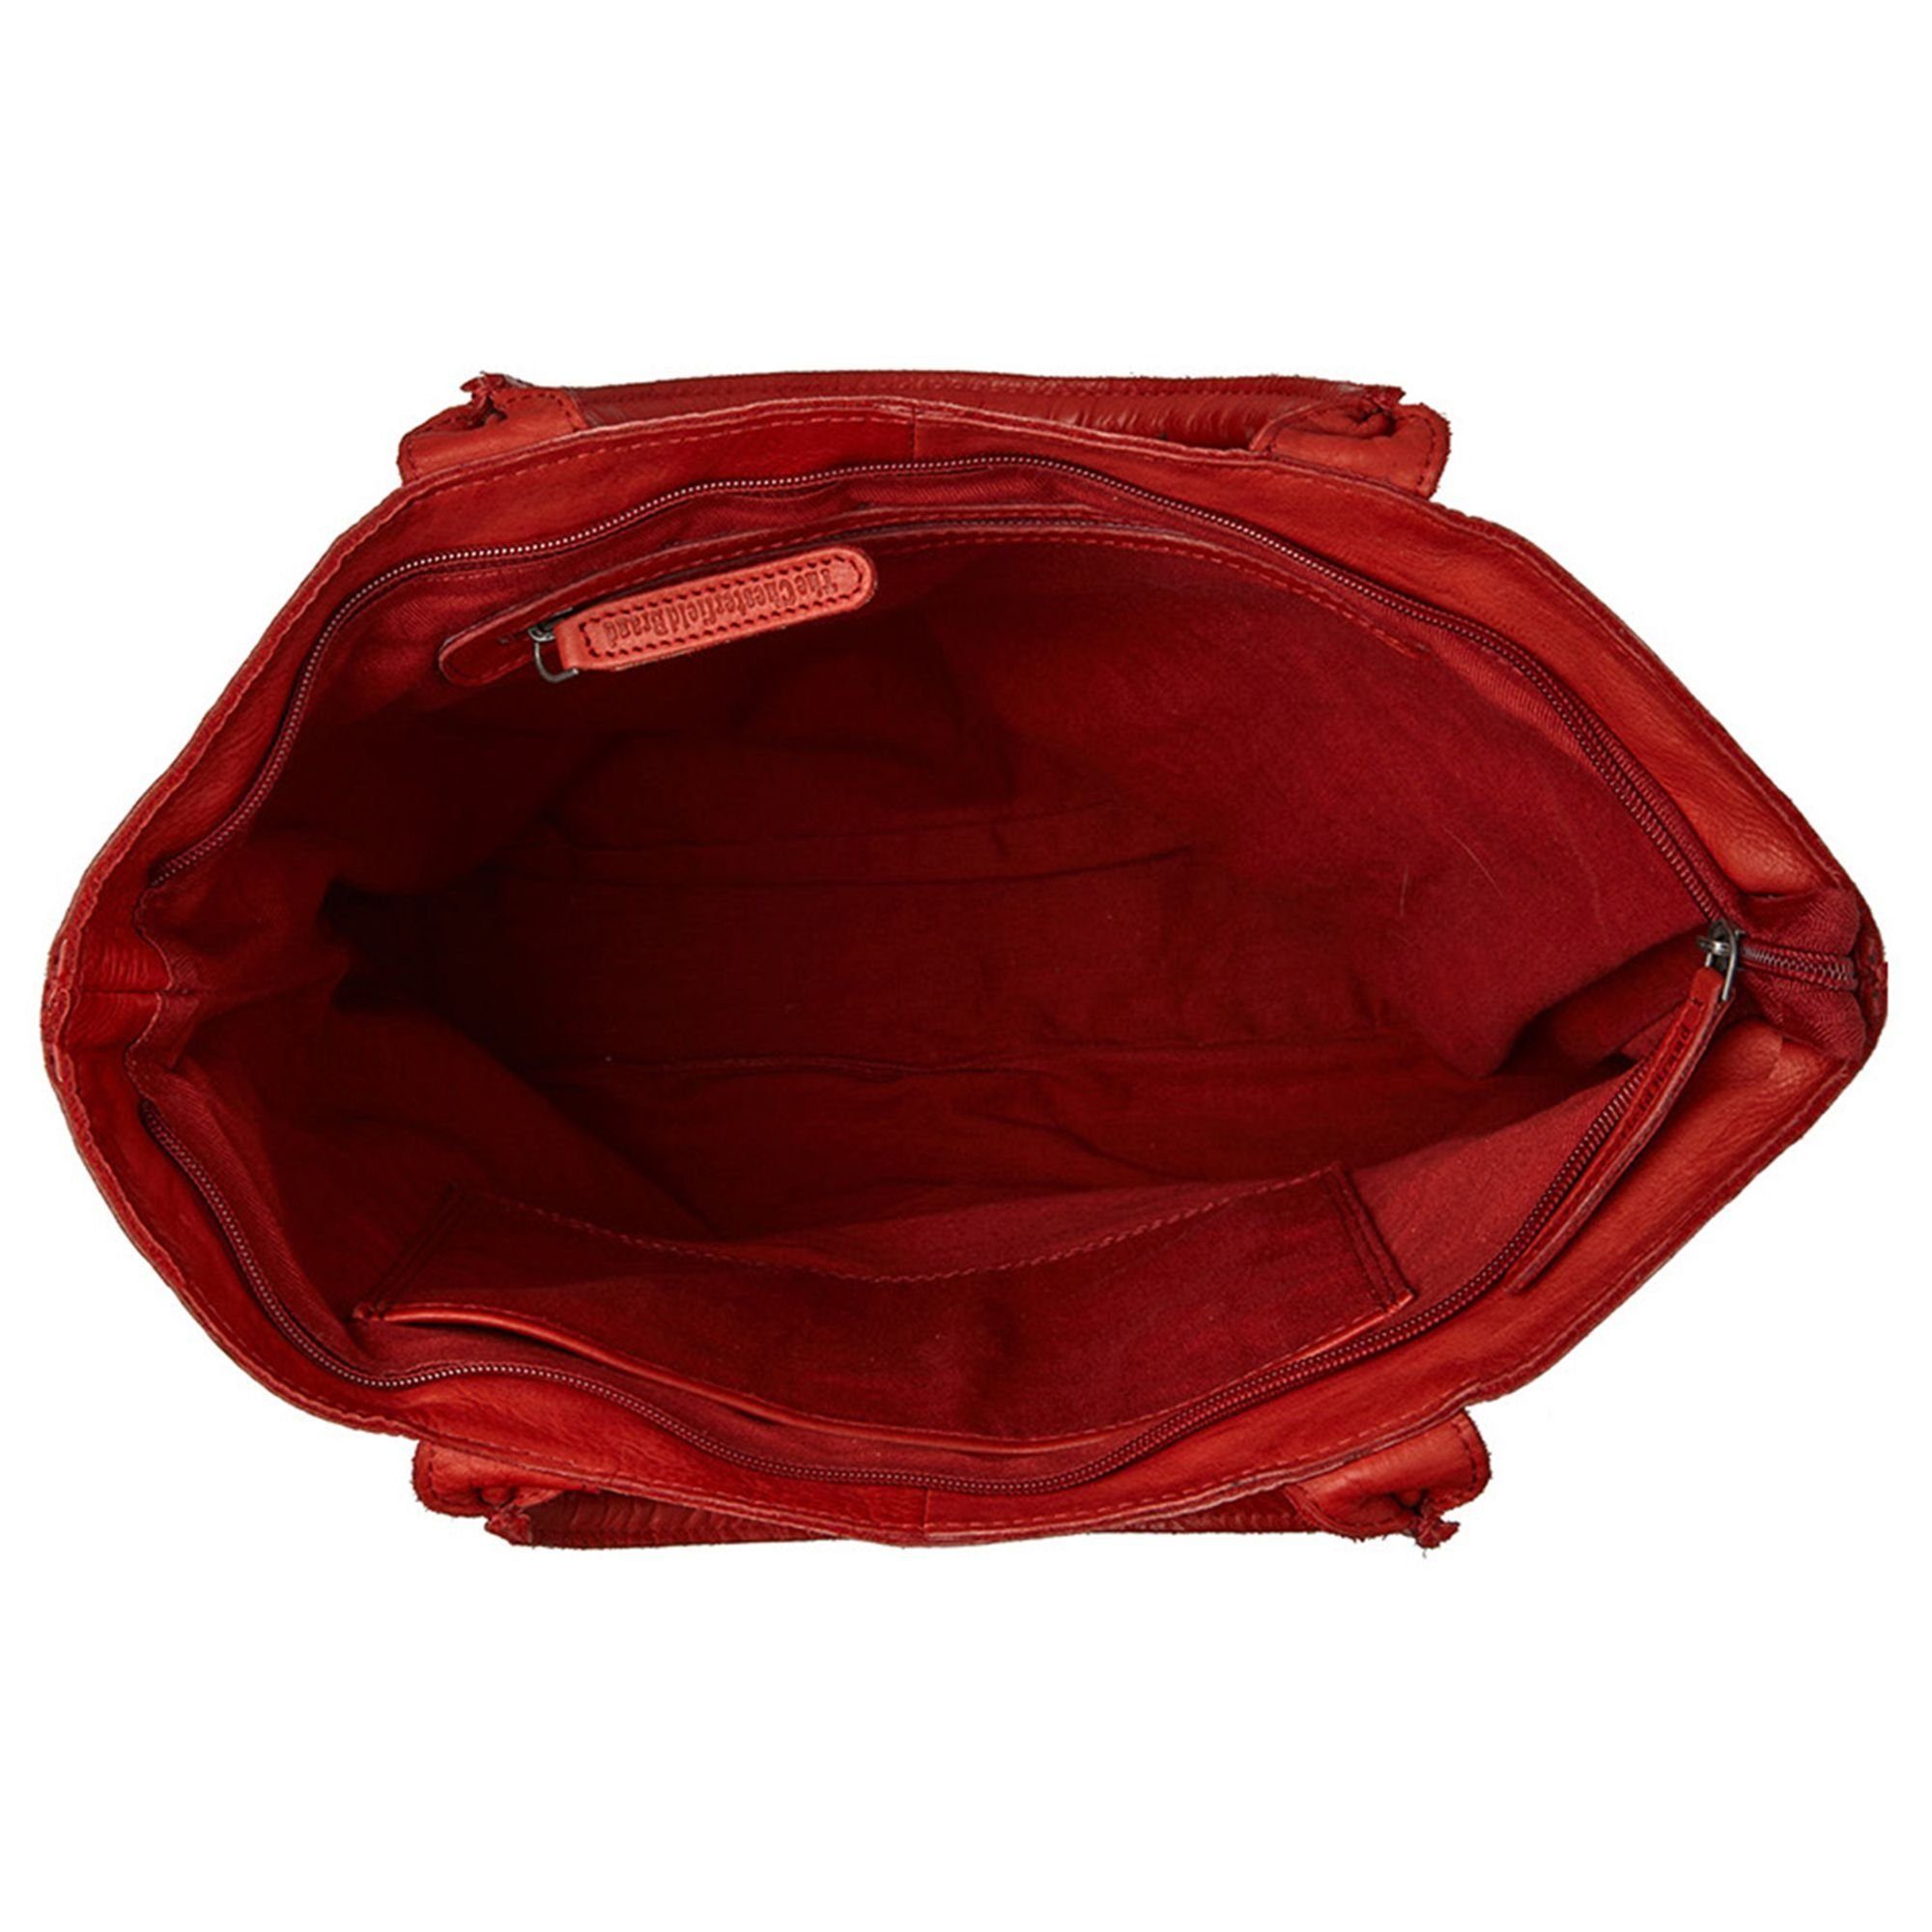 The Chesterfield Brand Leder red Henkeltasche